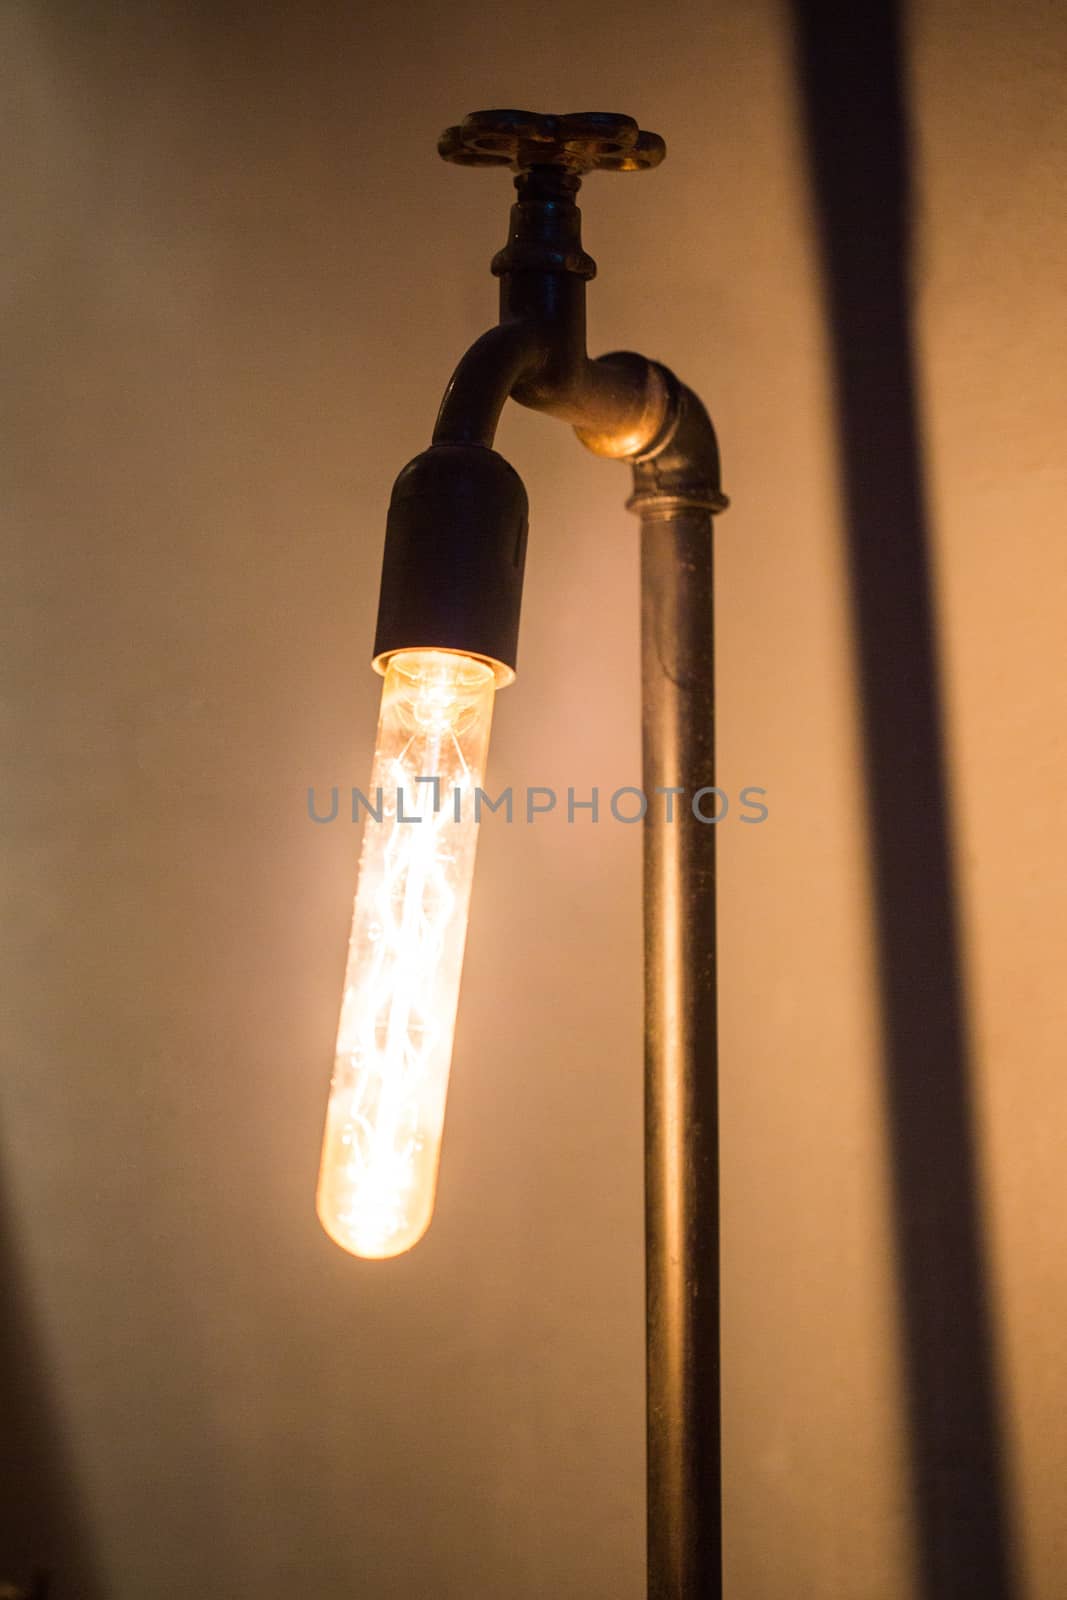 incandescent light built into the faucet